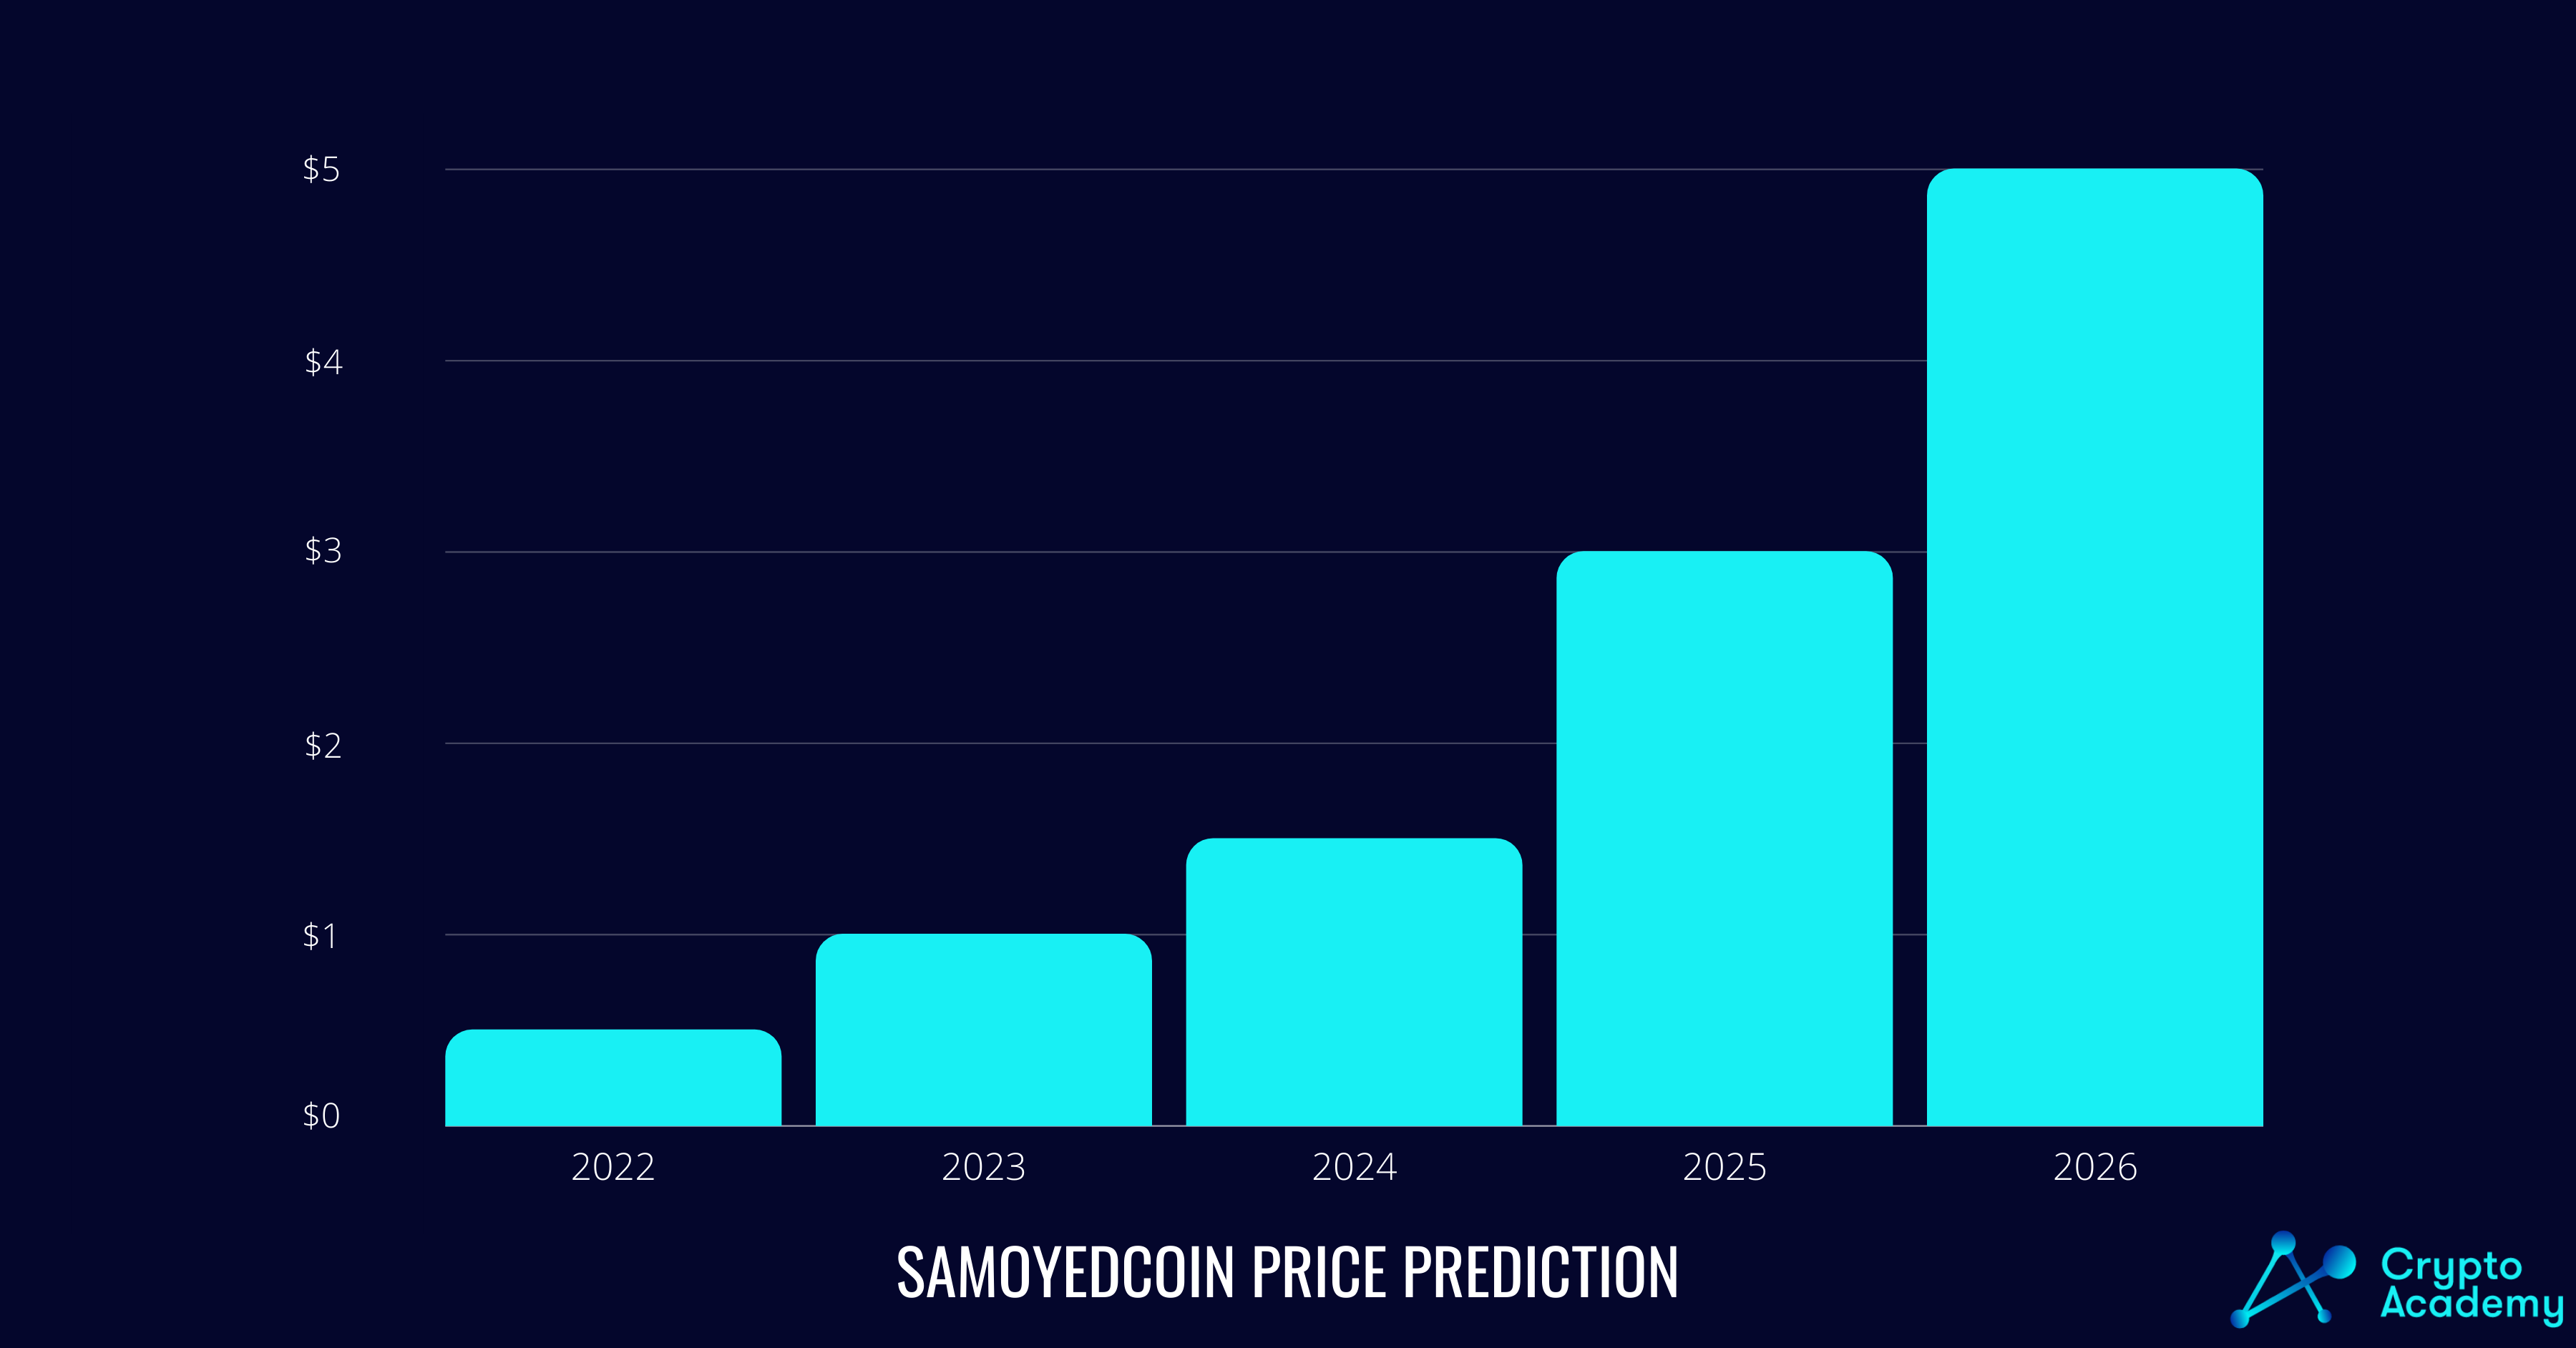 Samoyed (SAMO) price prediction for the next five years